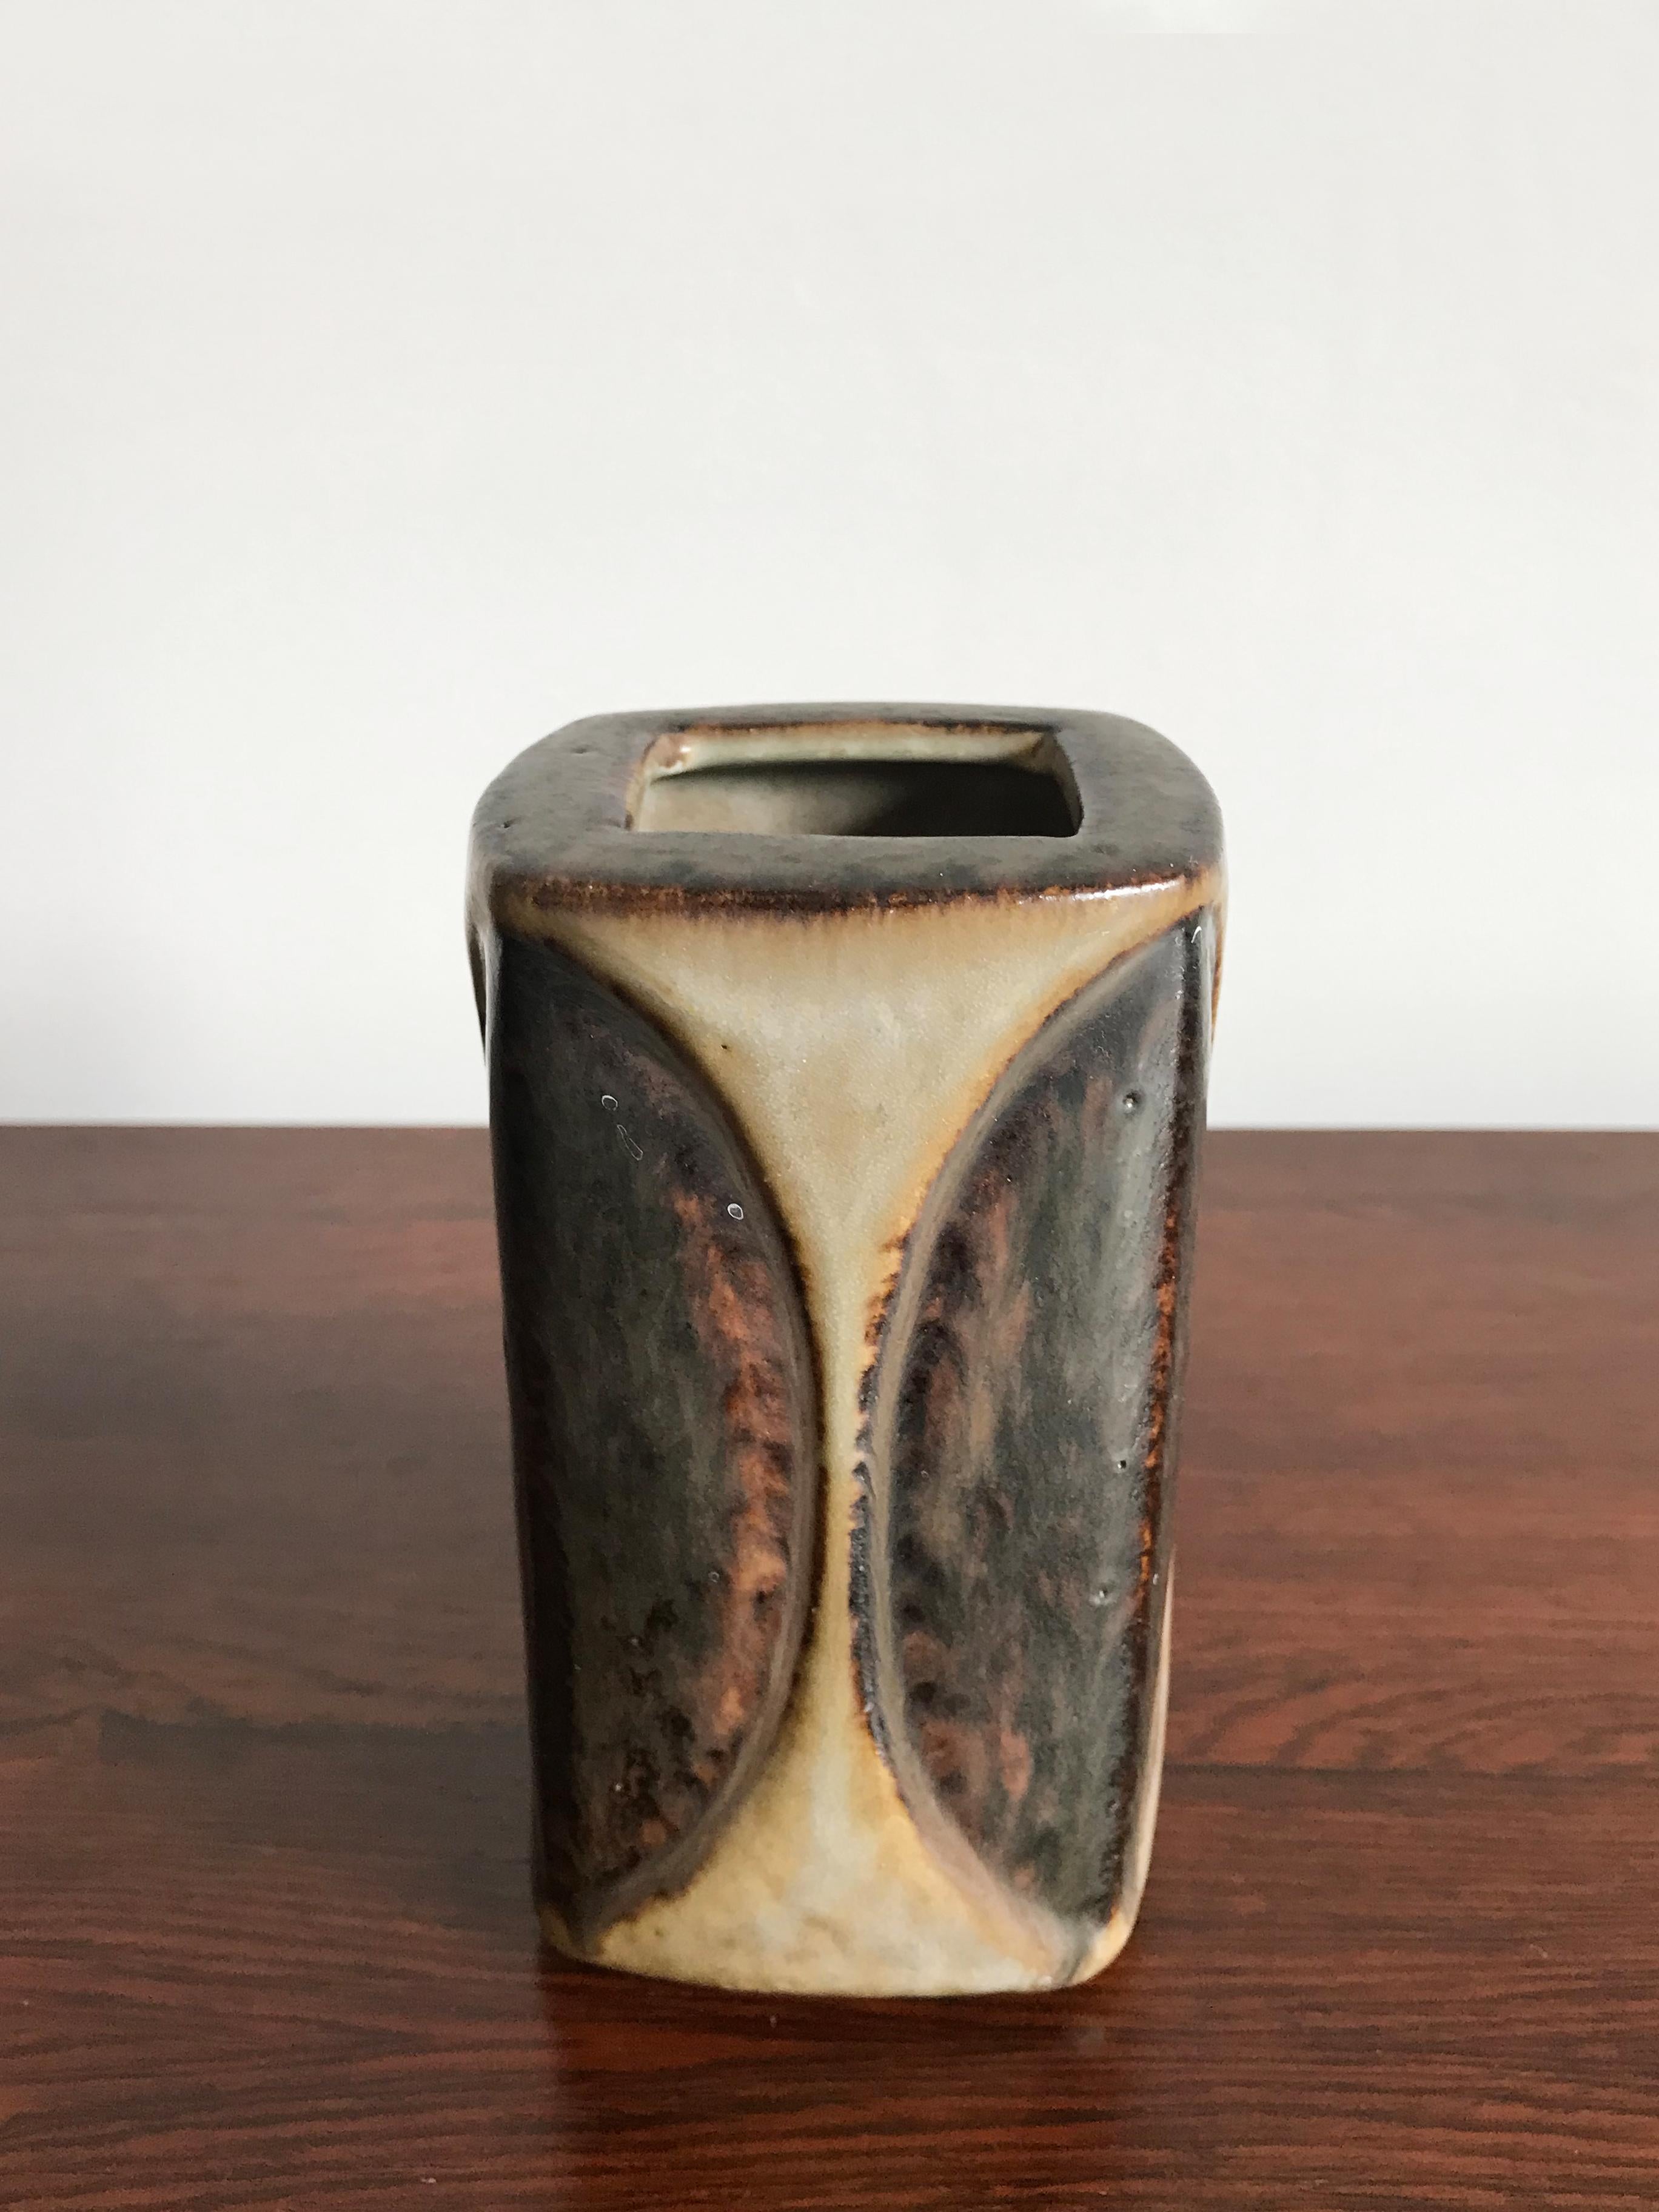 Scandinavian Mid-Century Modern design ceramic vase produed in Denmark, circa 1950s.